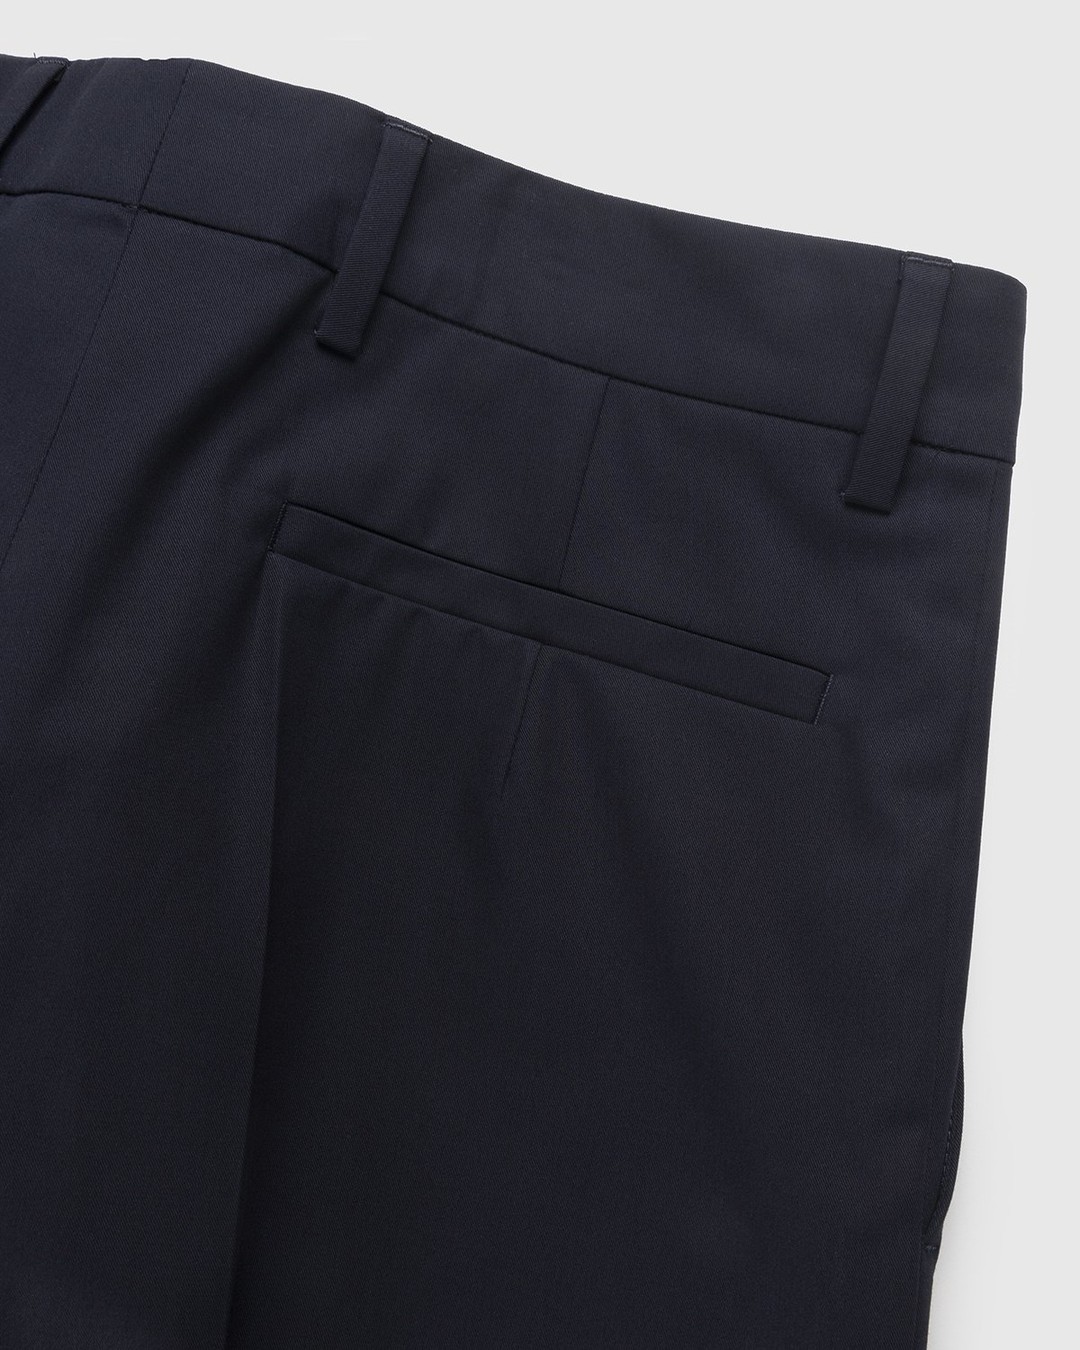 Dries van Noten – Parwin Shorts Navy - Shorts - Blue - Image 3